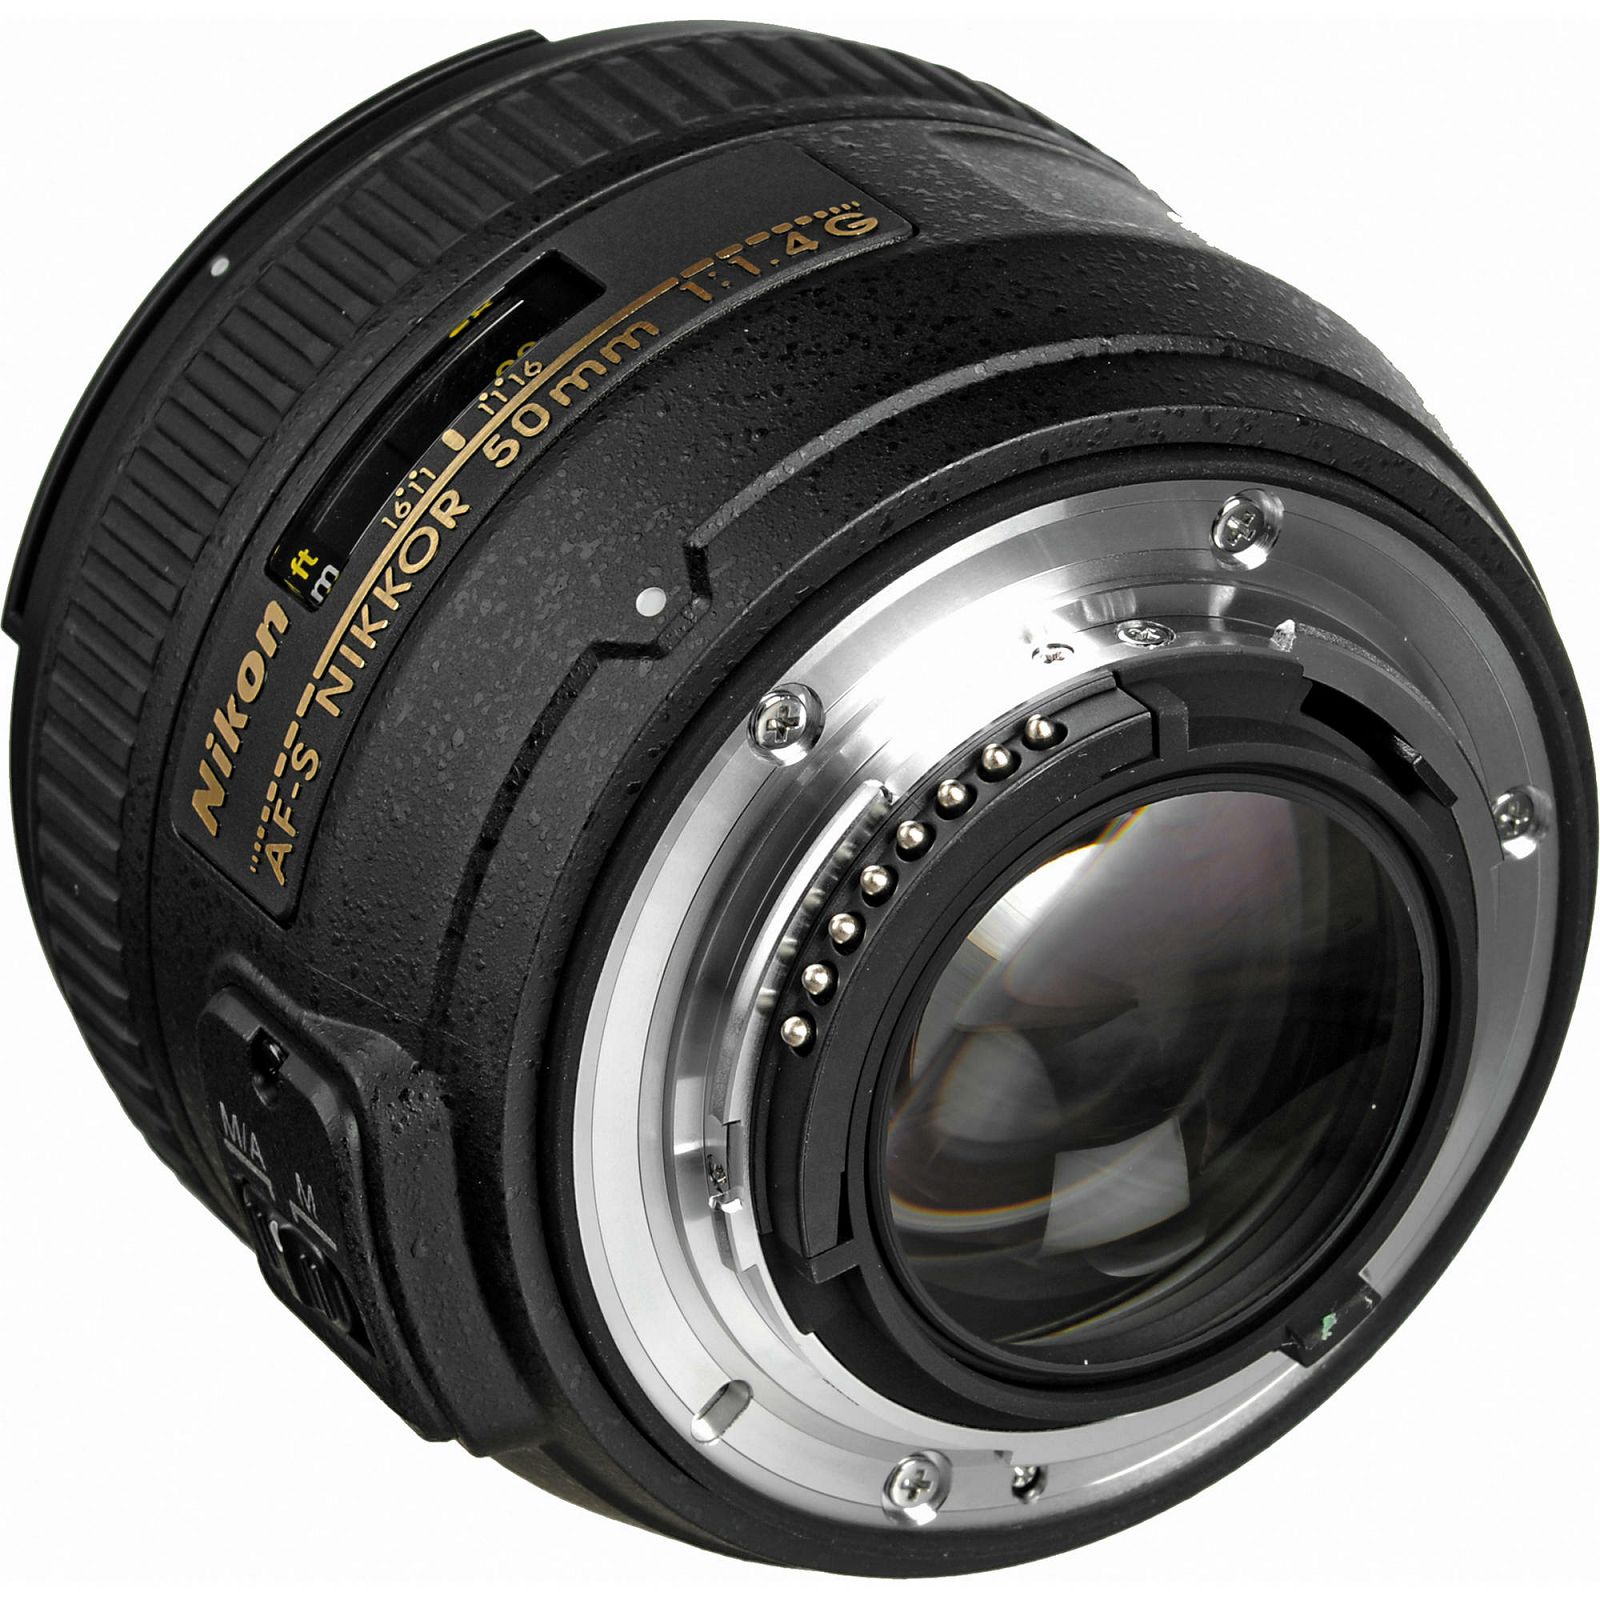 Nikon AF-S 50mm f/1.4G FX standardni objektiv fiksne žarišne duljine Nikkor 50 f/1.4 1.4 G auto focus prime lens (JAA014DA)